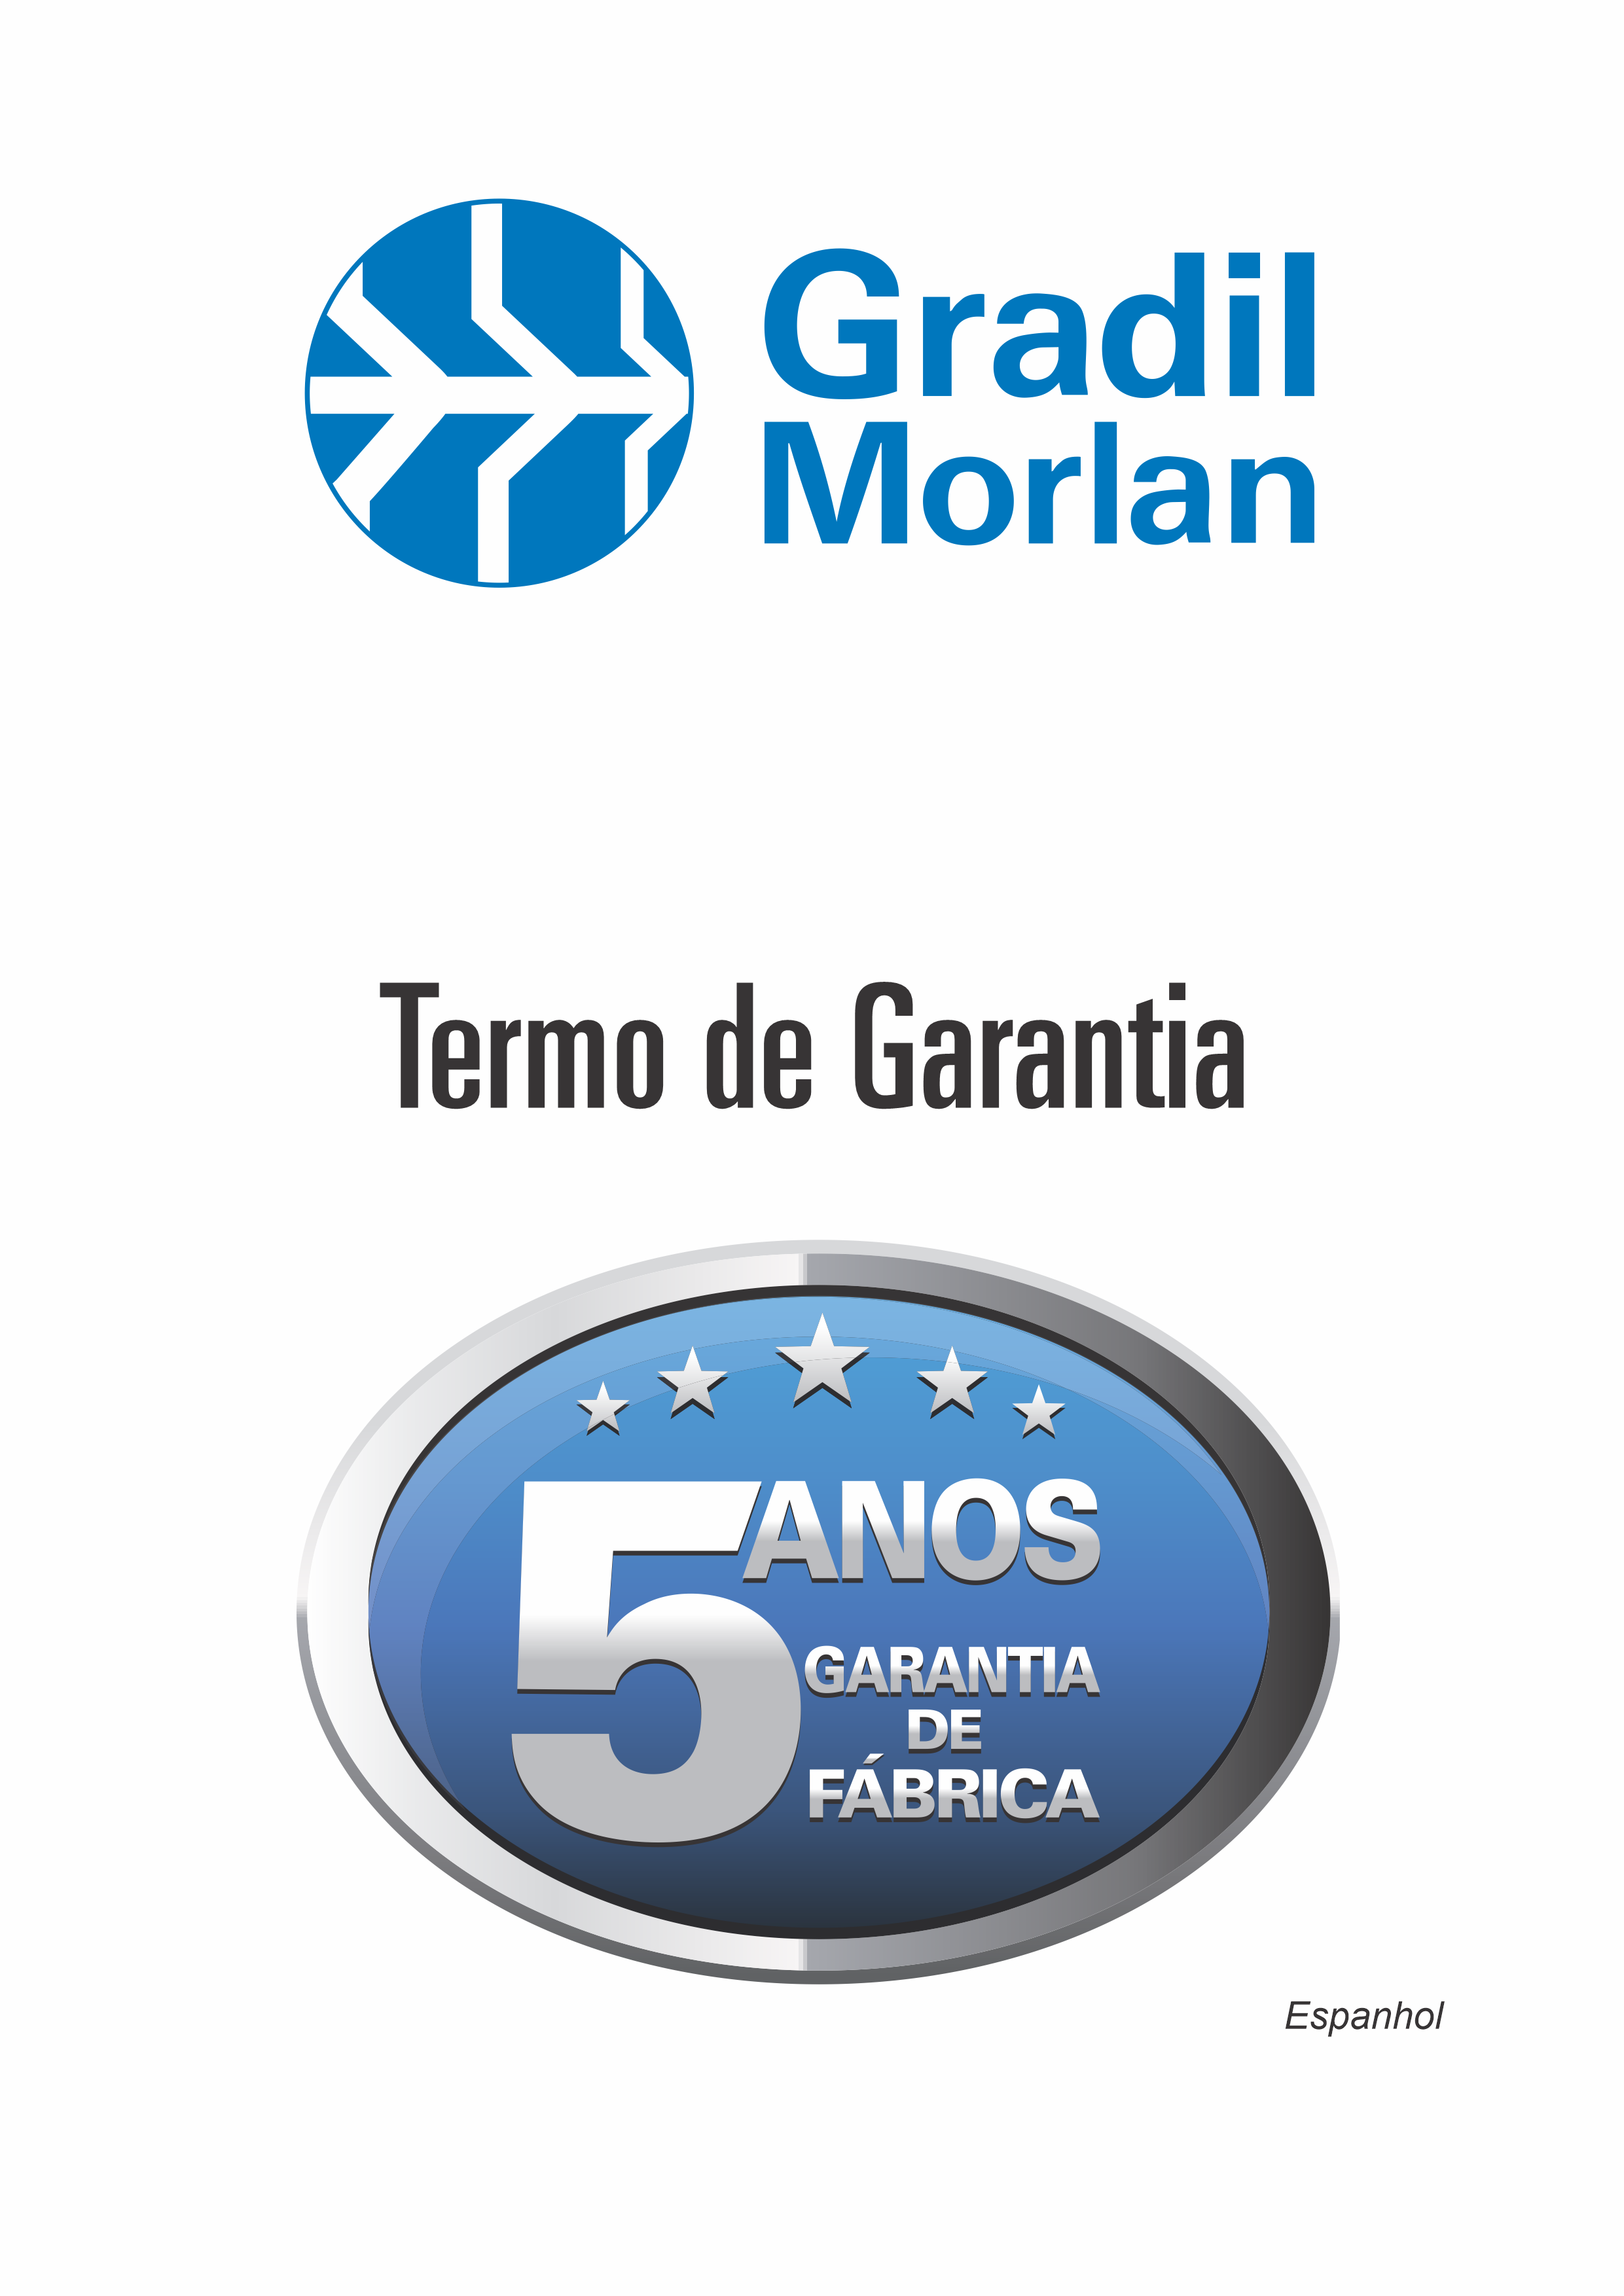 Gradil Morlan - Termo de 5 anos de Garantia de Fábrica (Espanhol)